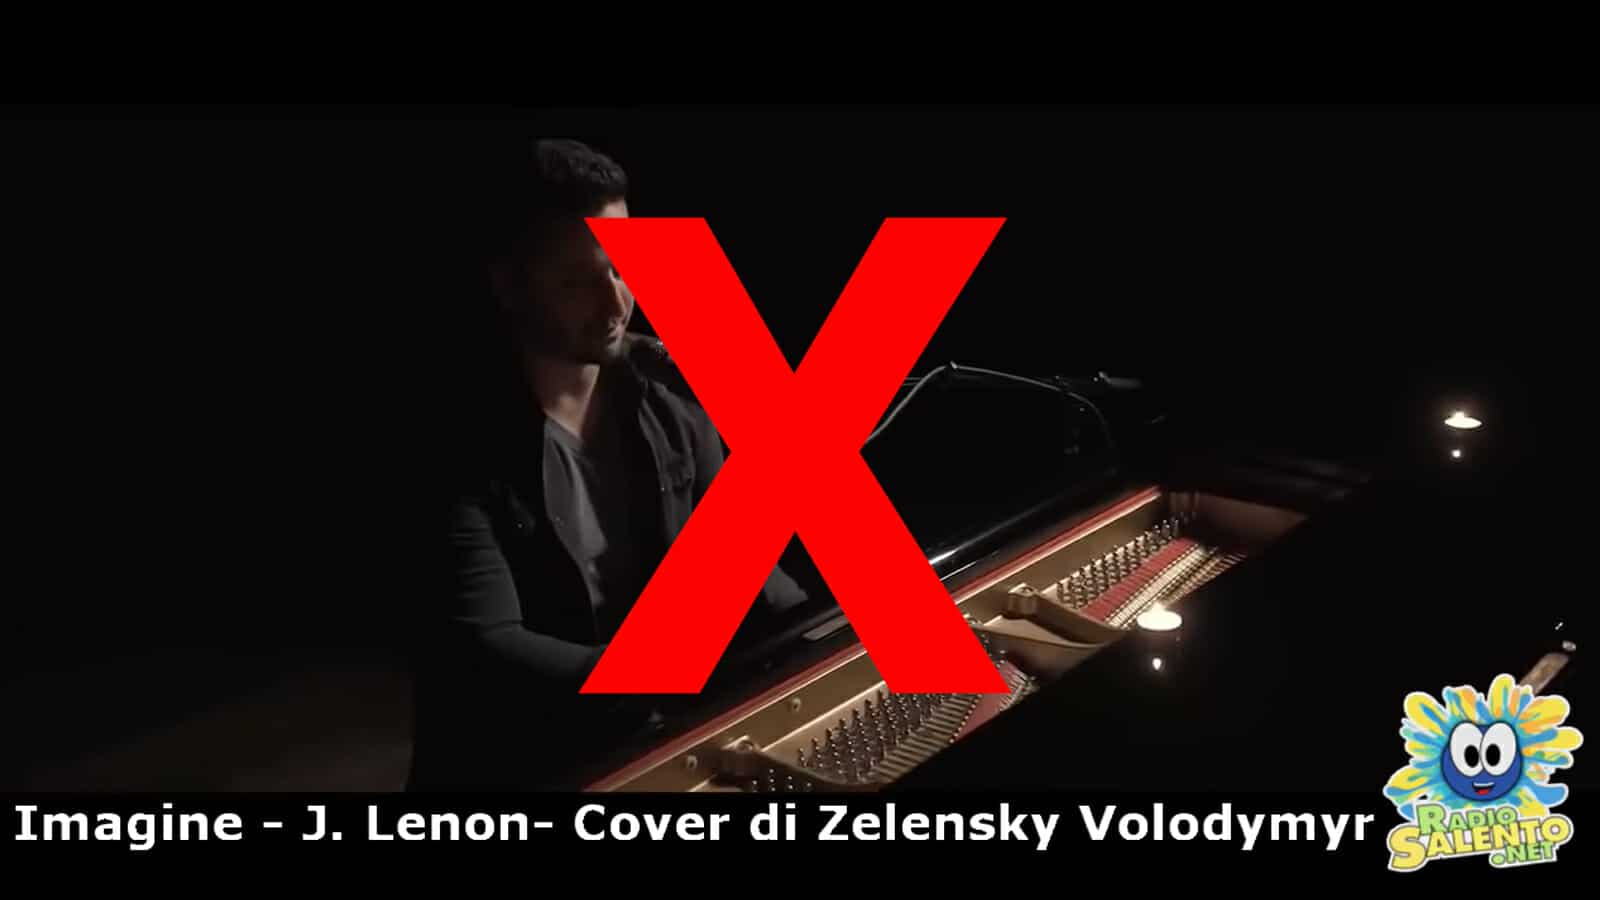 Wolodymyr Selenskyj hat nicht "Imagine" von John Lennon gecovert / Artikelbild: Screenshot YouTube/Radio Salento